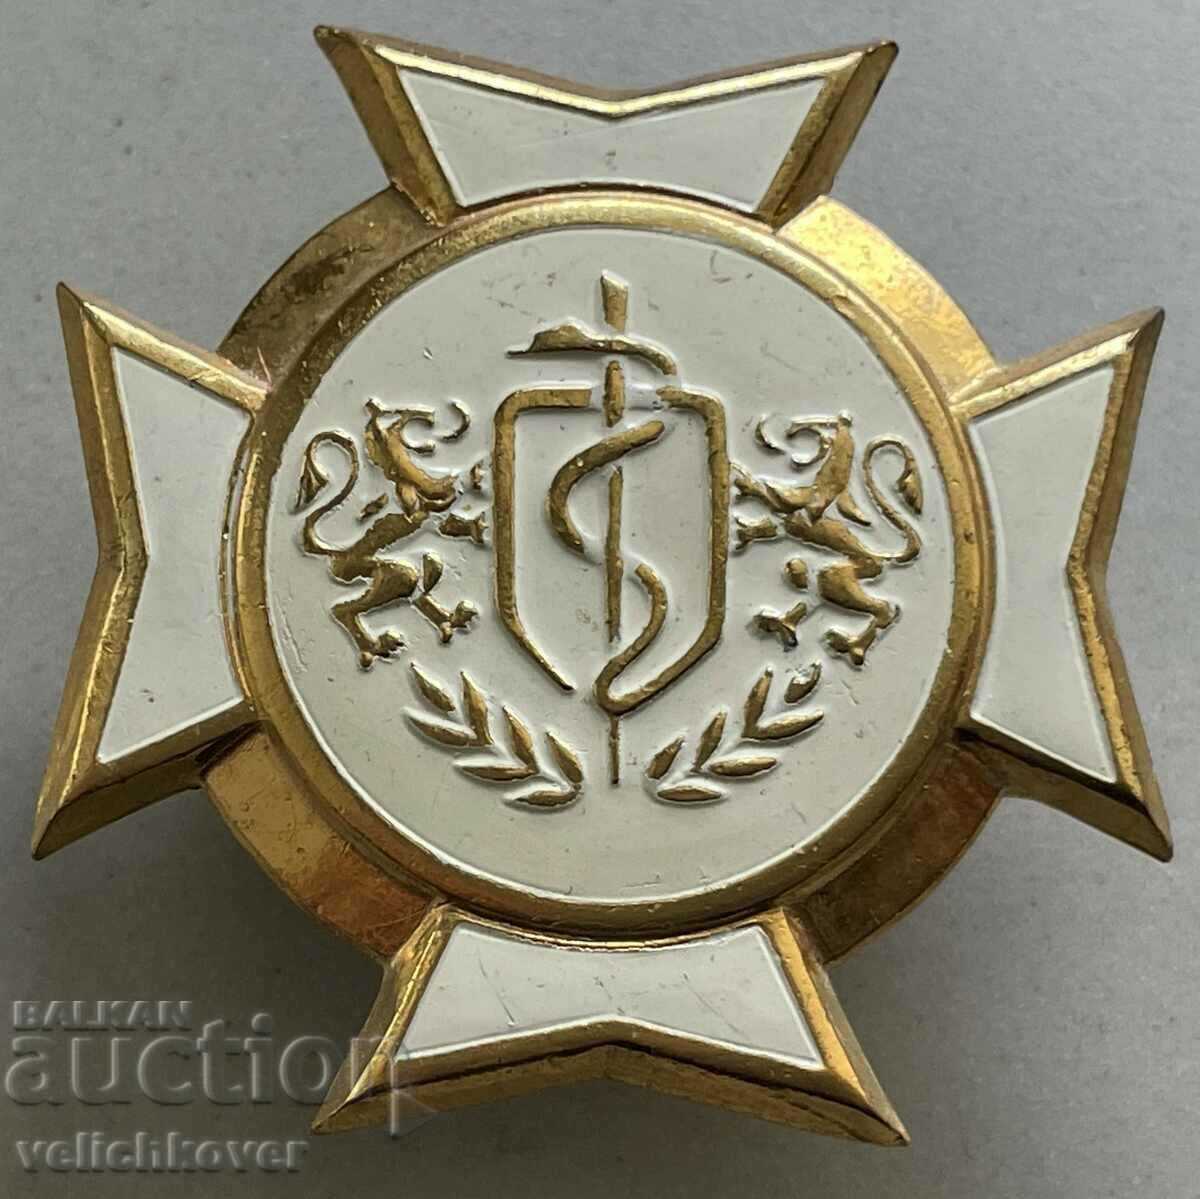 34482 Bulgaria military badge Military Medical Academy screw